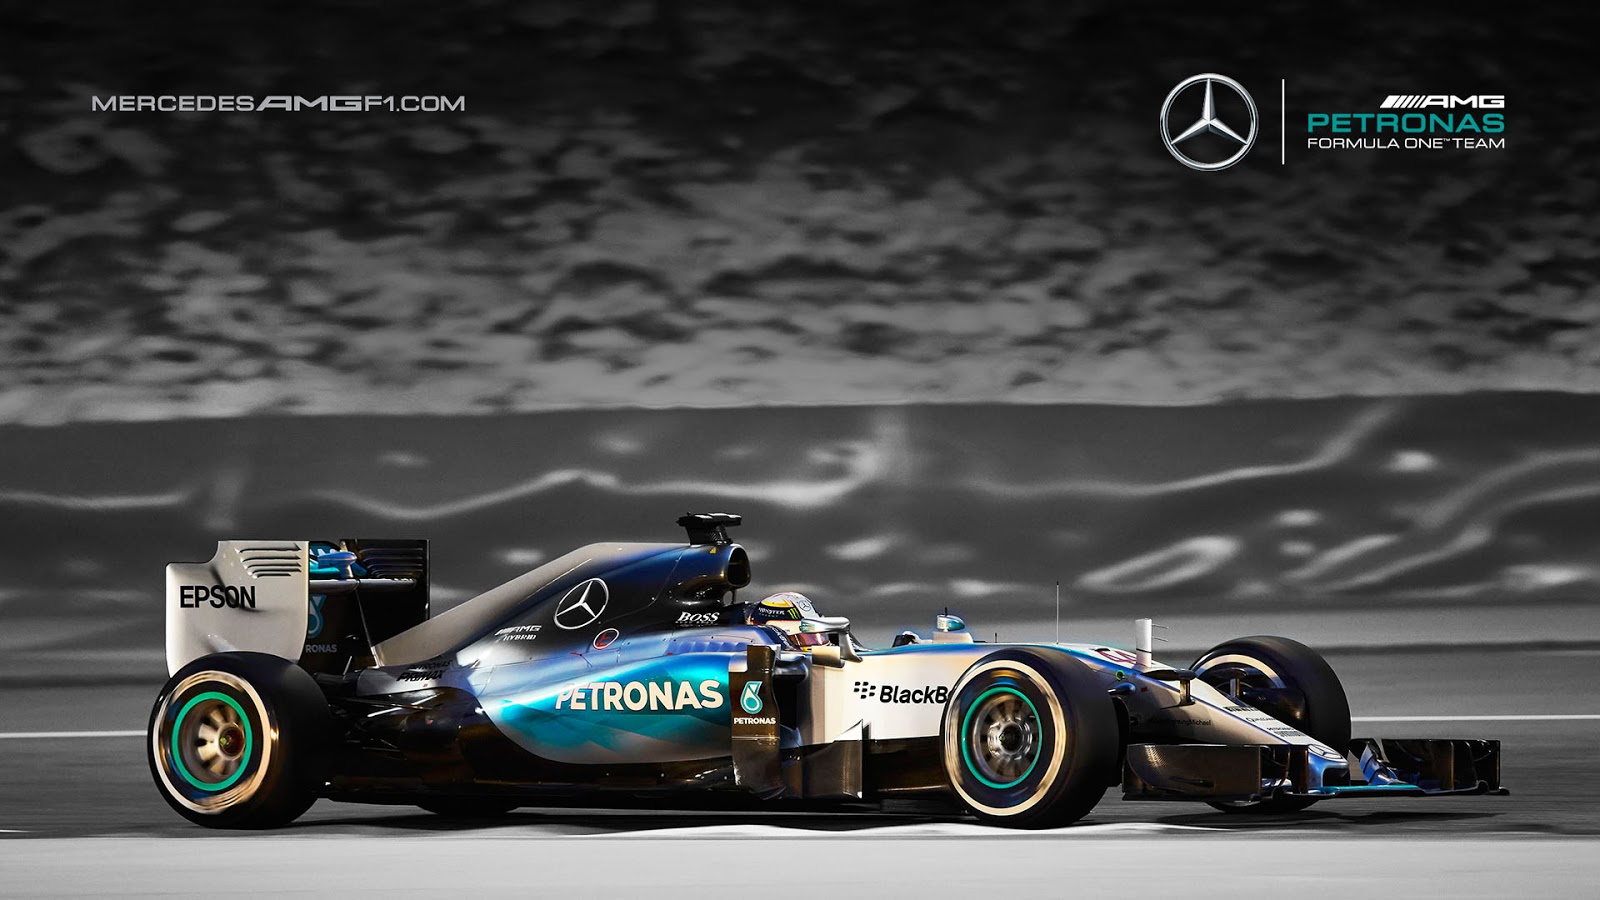 Mercedes Amg Petronas W06 F1 Wallpaper Kfzoom